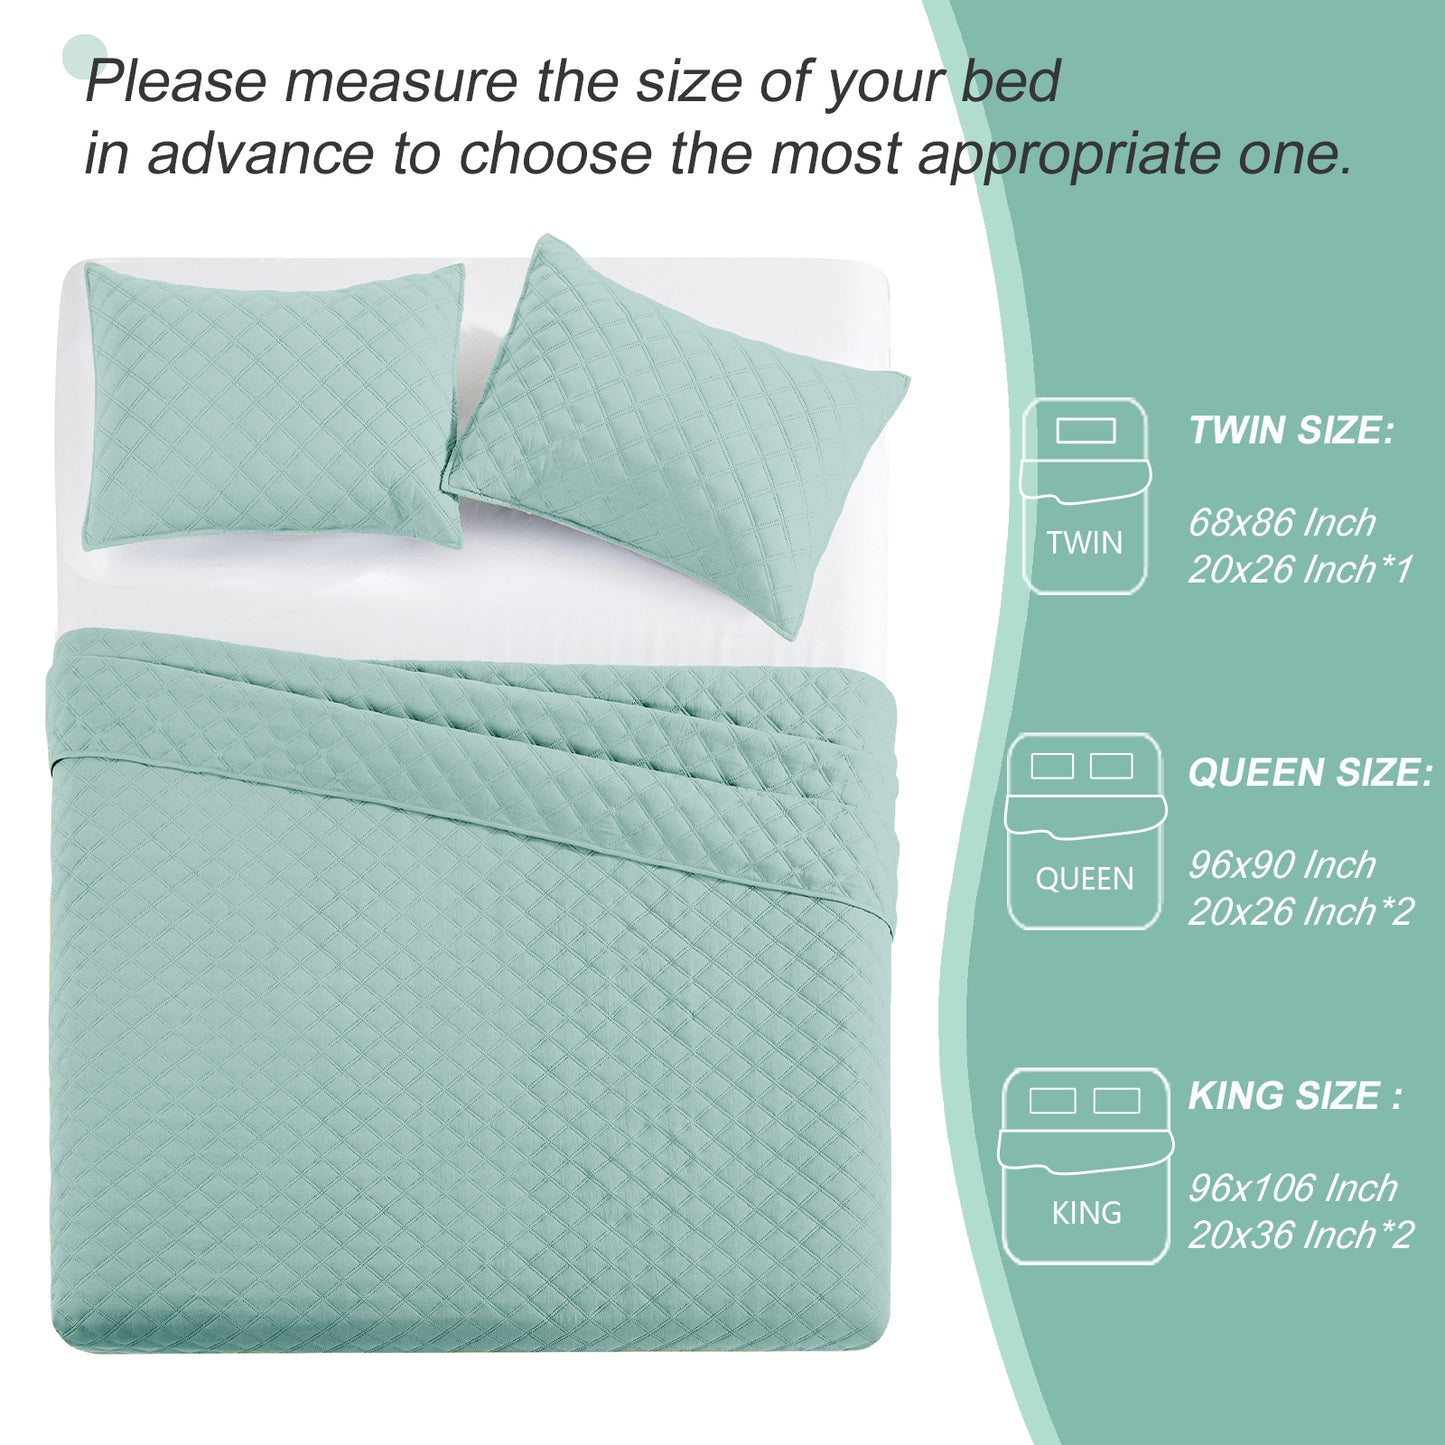 Exclusivo Mezcla 3-Piece Aqua Queen Size Quilt Set, Box Pattern Ultrasonic Lightweight and Soft Quilts/Bedspreads/Coverlets/Bedding Set (1 Quilt, 2 Pillow Shams) for All Seasons